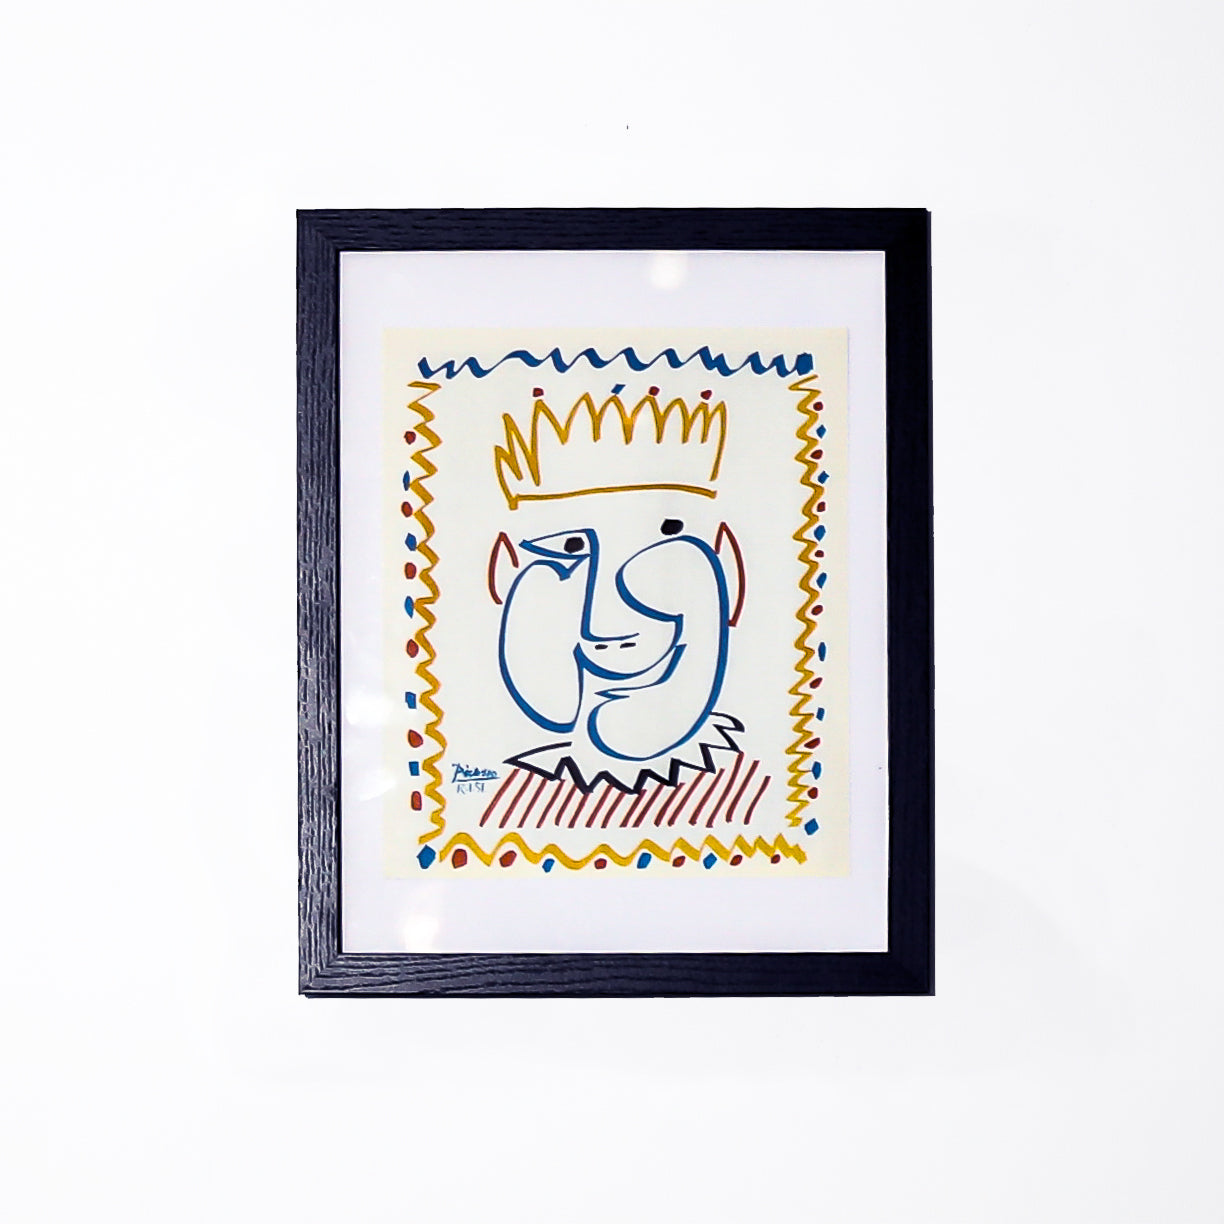 Picasso "Le Roi DuCarnival" Offset Lithograph Print (c. 1960s)